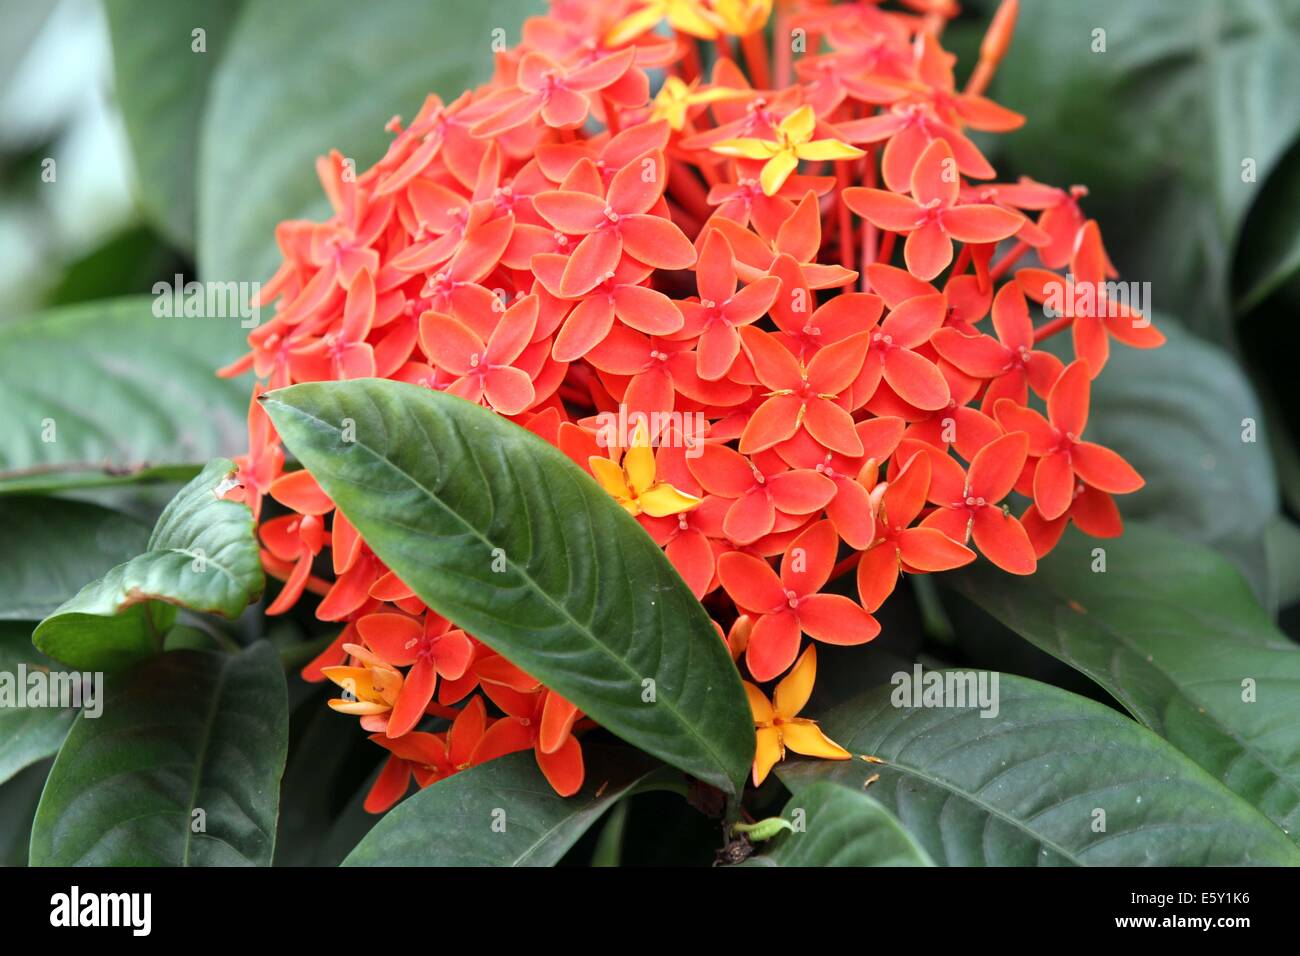 ixora flowers / Rangan flower of Southern Asia. Stock Photo